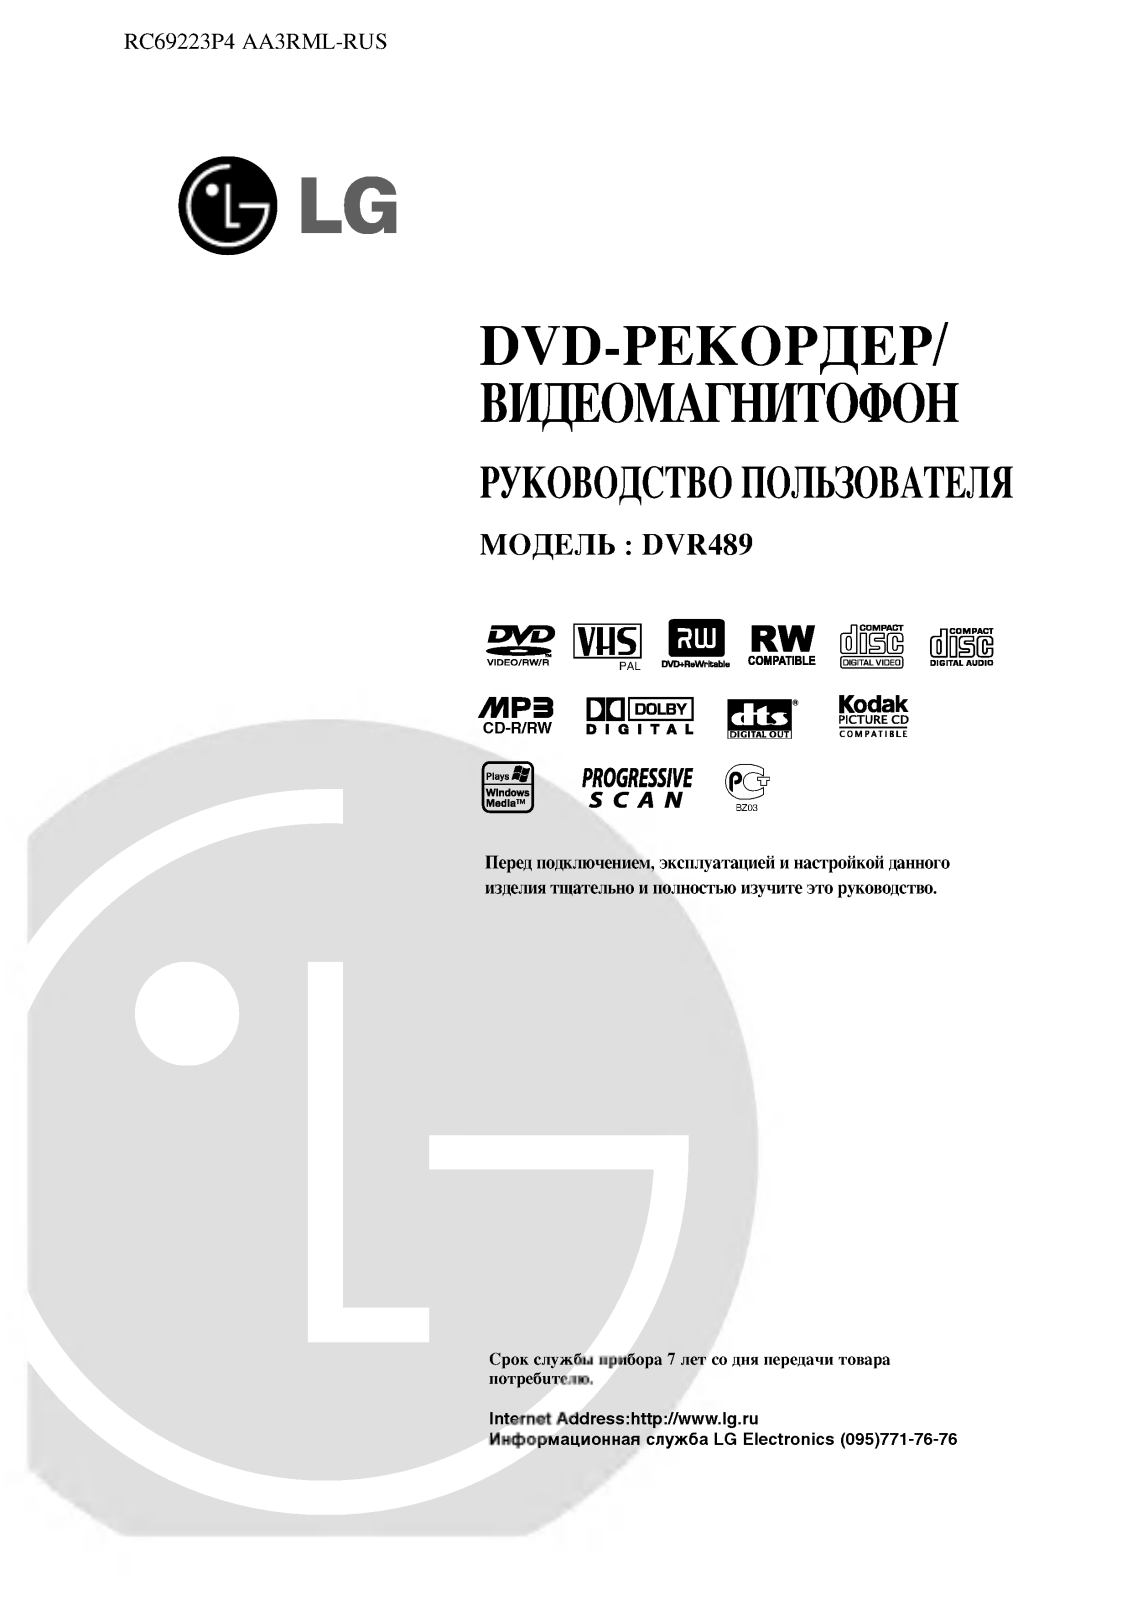 LG DVR489 User manual